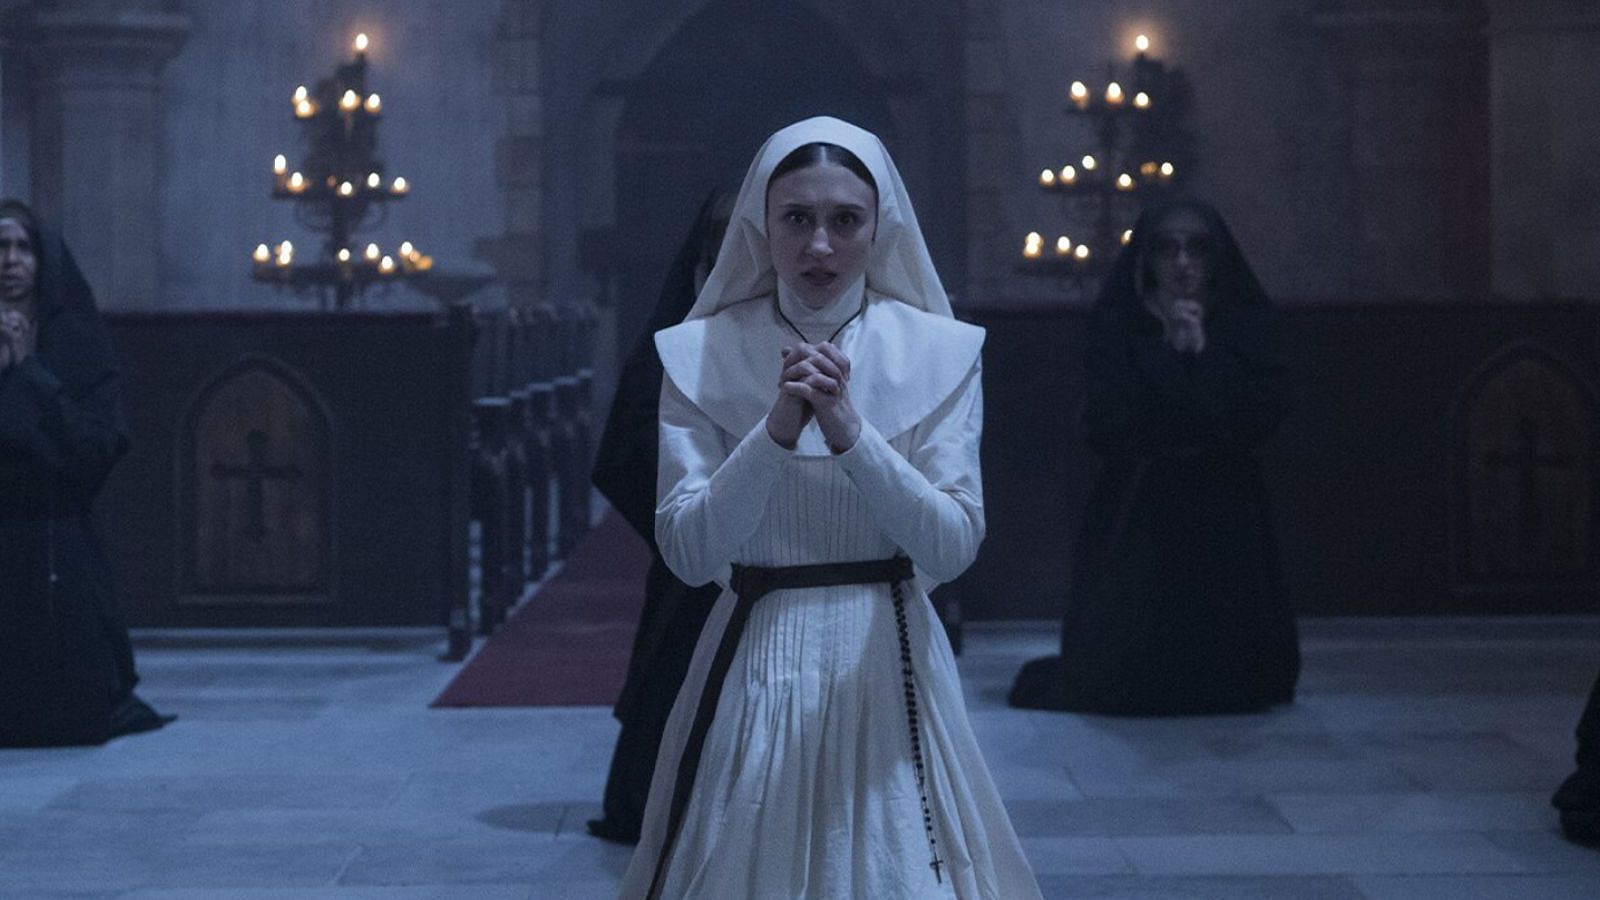  A still from The Nun II (Image via IMDb)